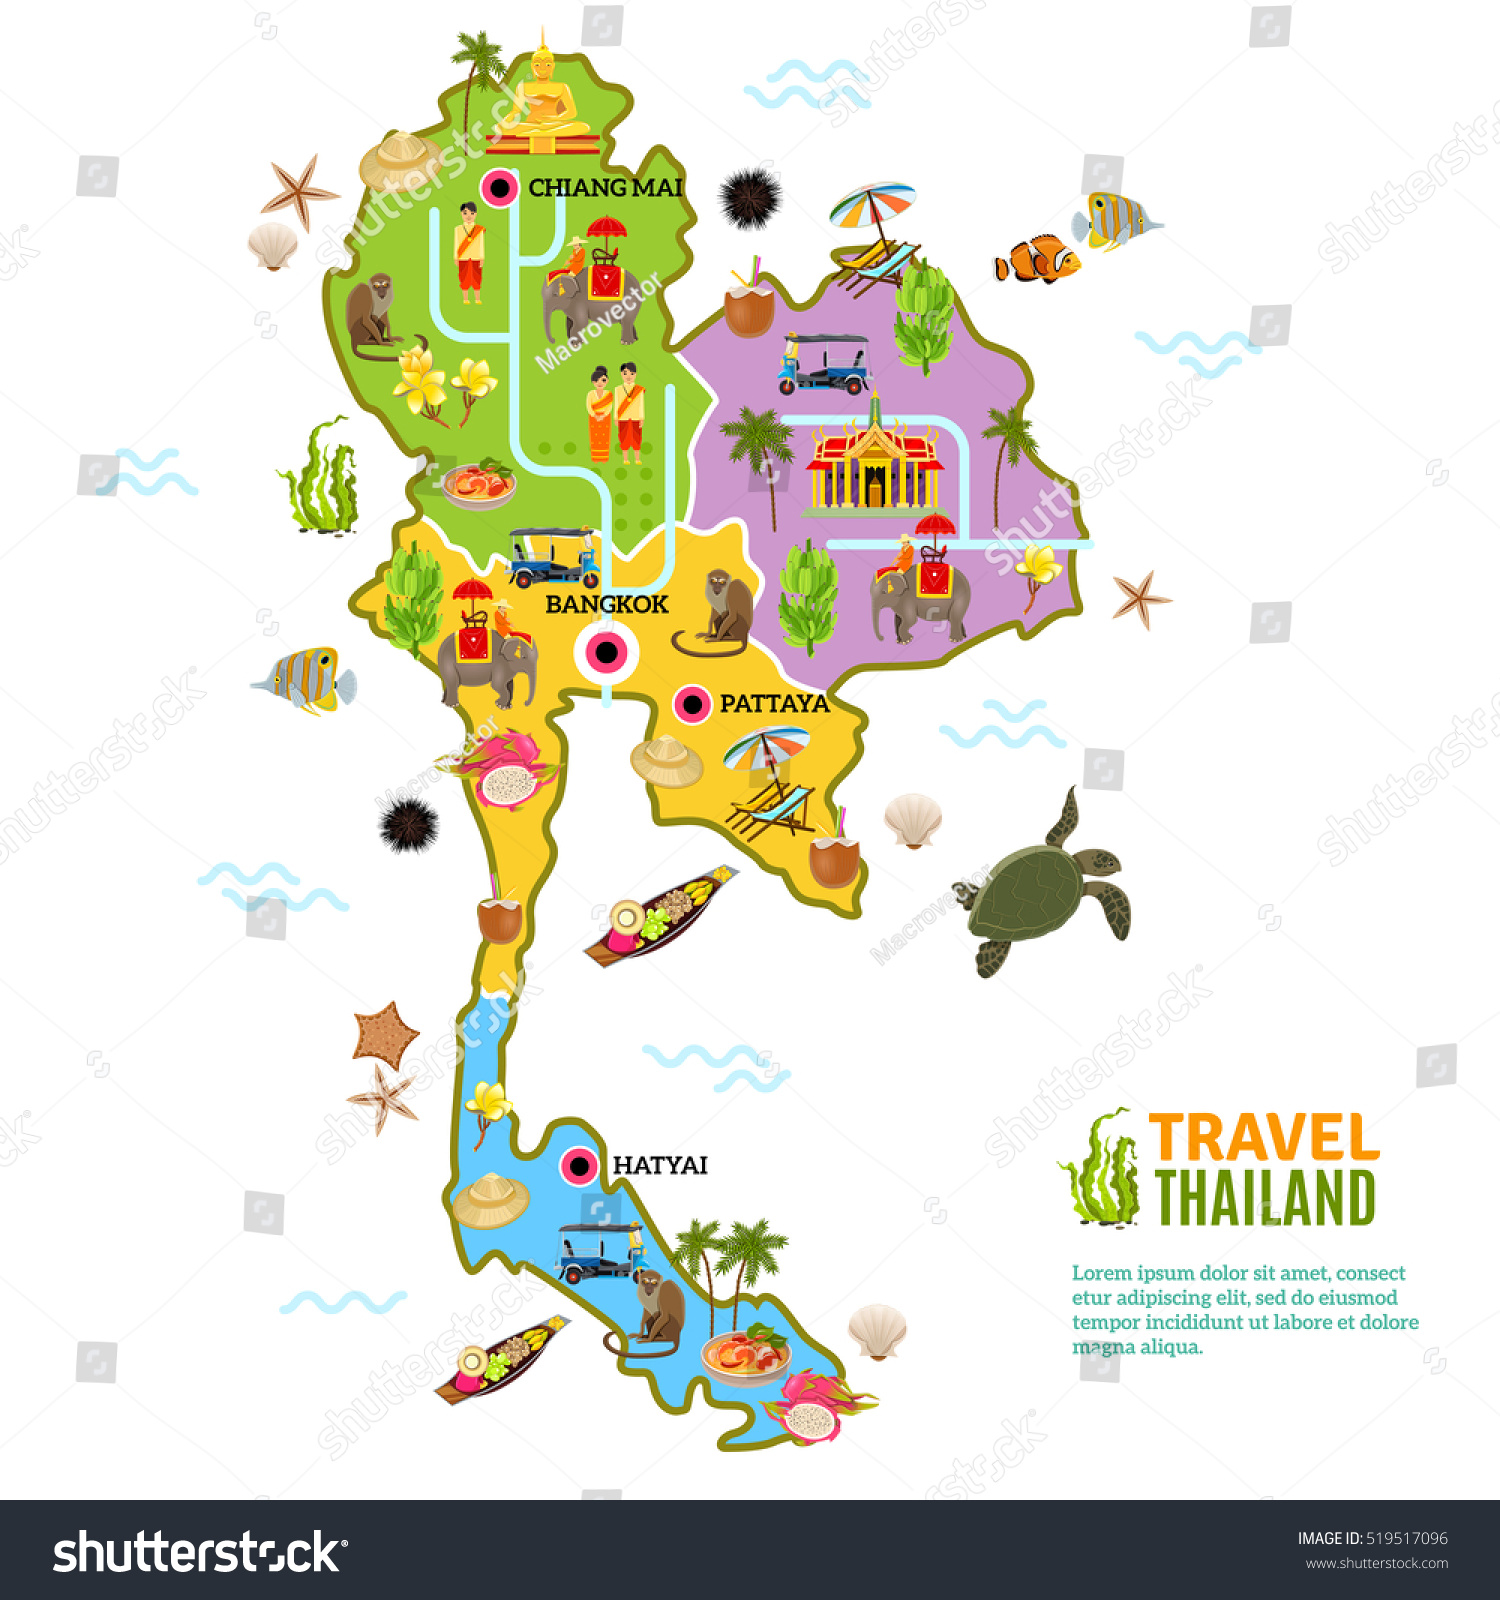 thailand tourist guidelines